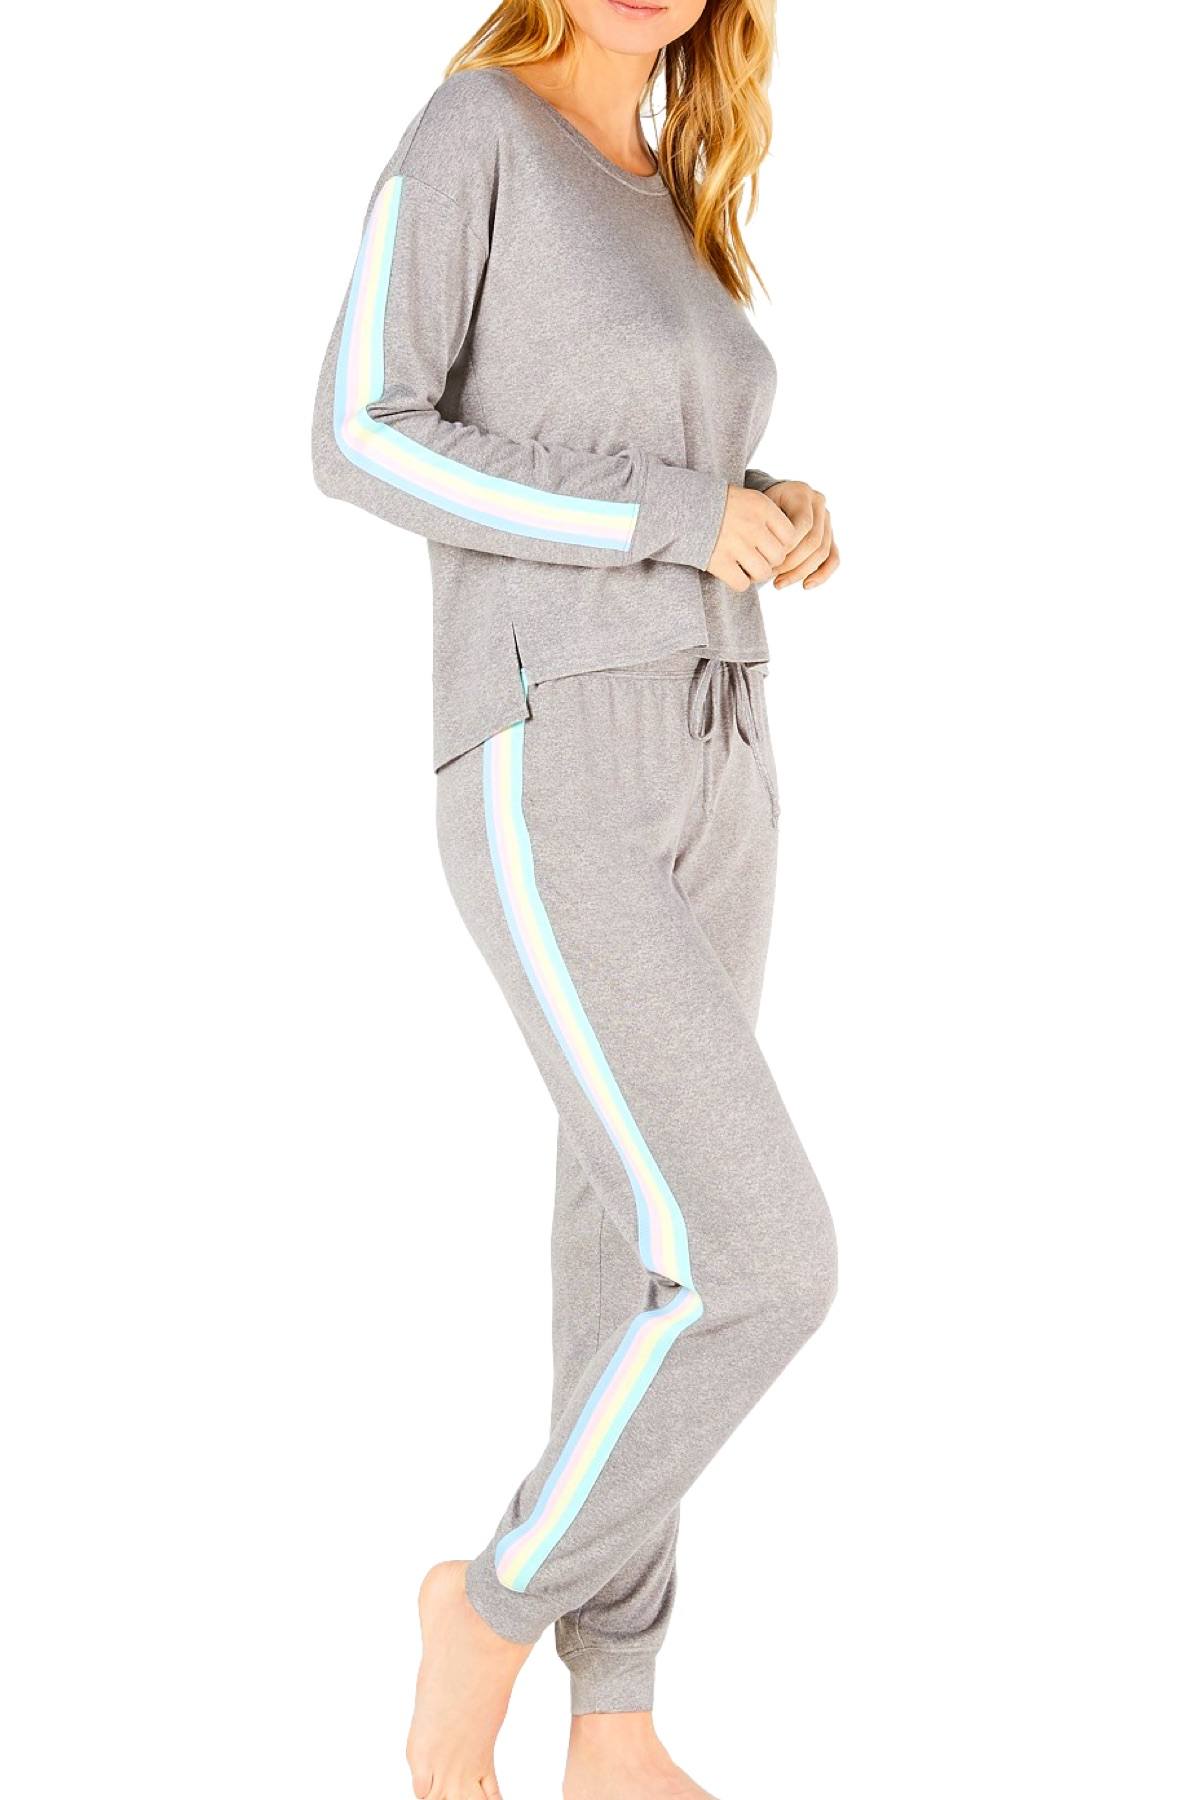 Jenni by Jennifer Moore Heather Grey / Pastel Rainbow Stripe Pajama Set